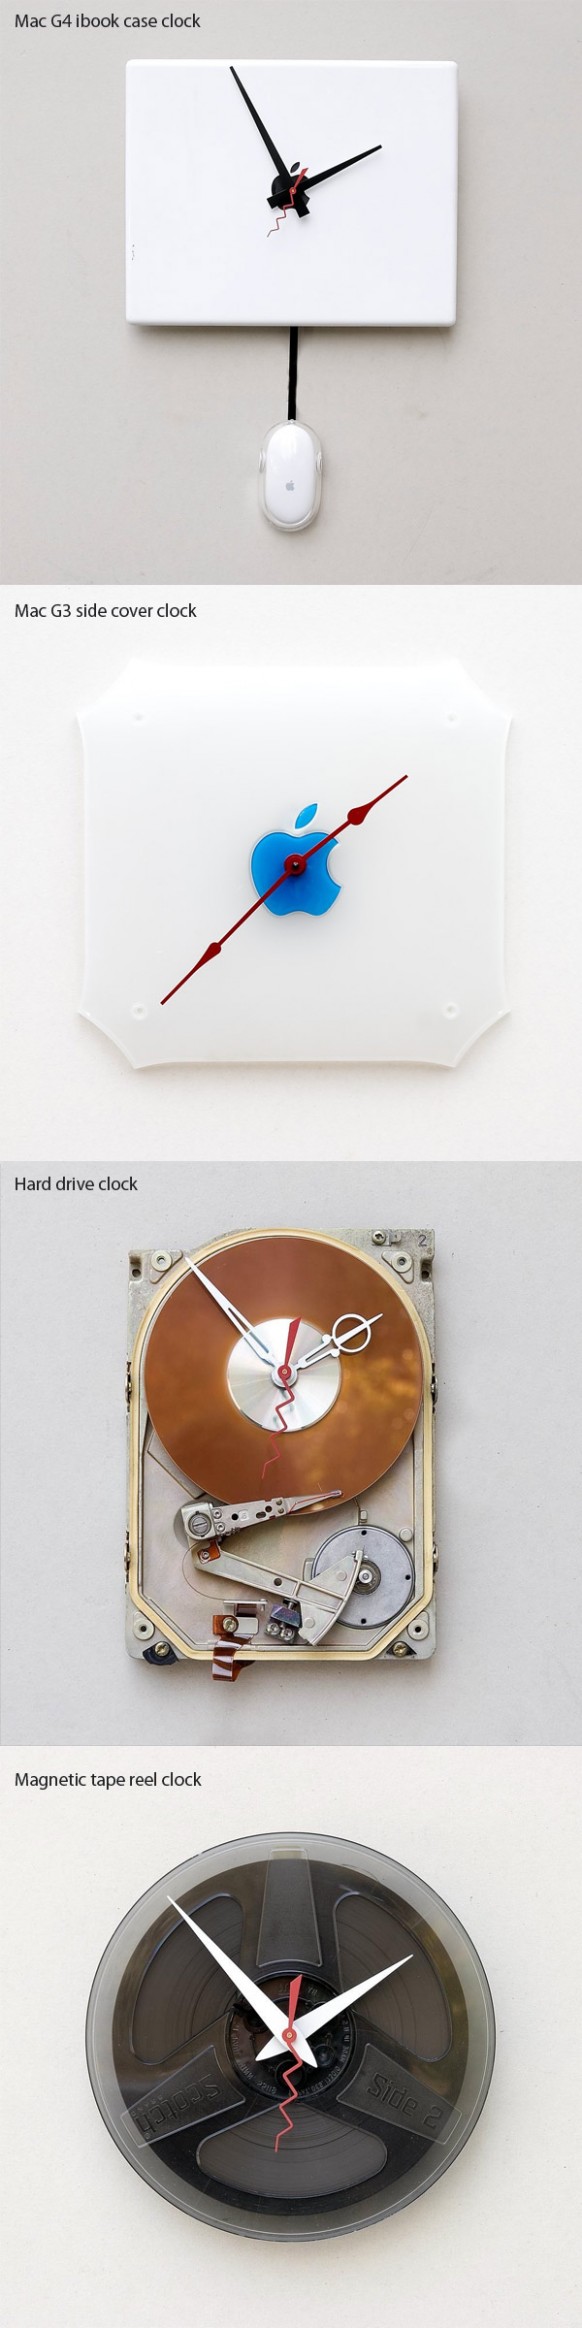 geeky-clocks